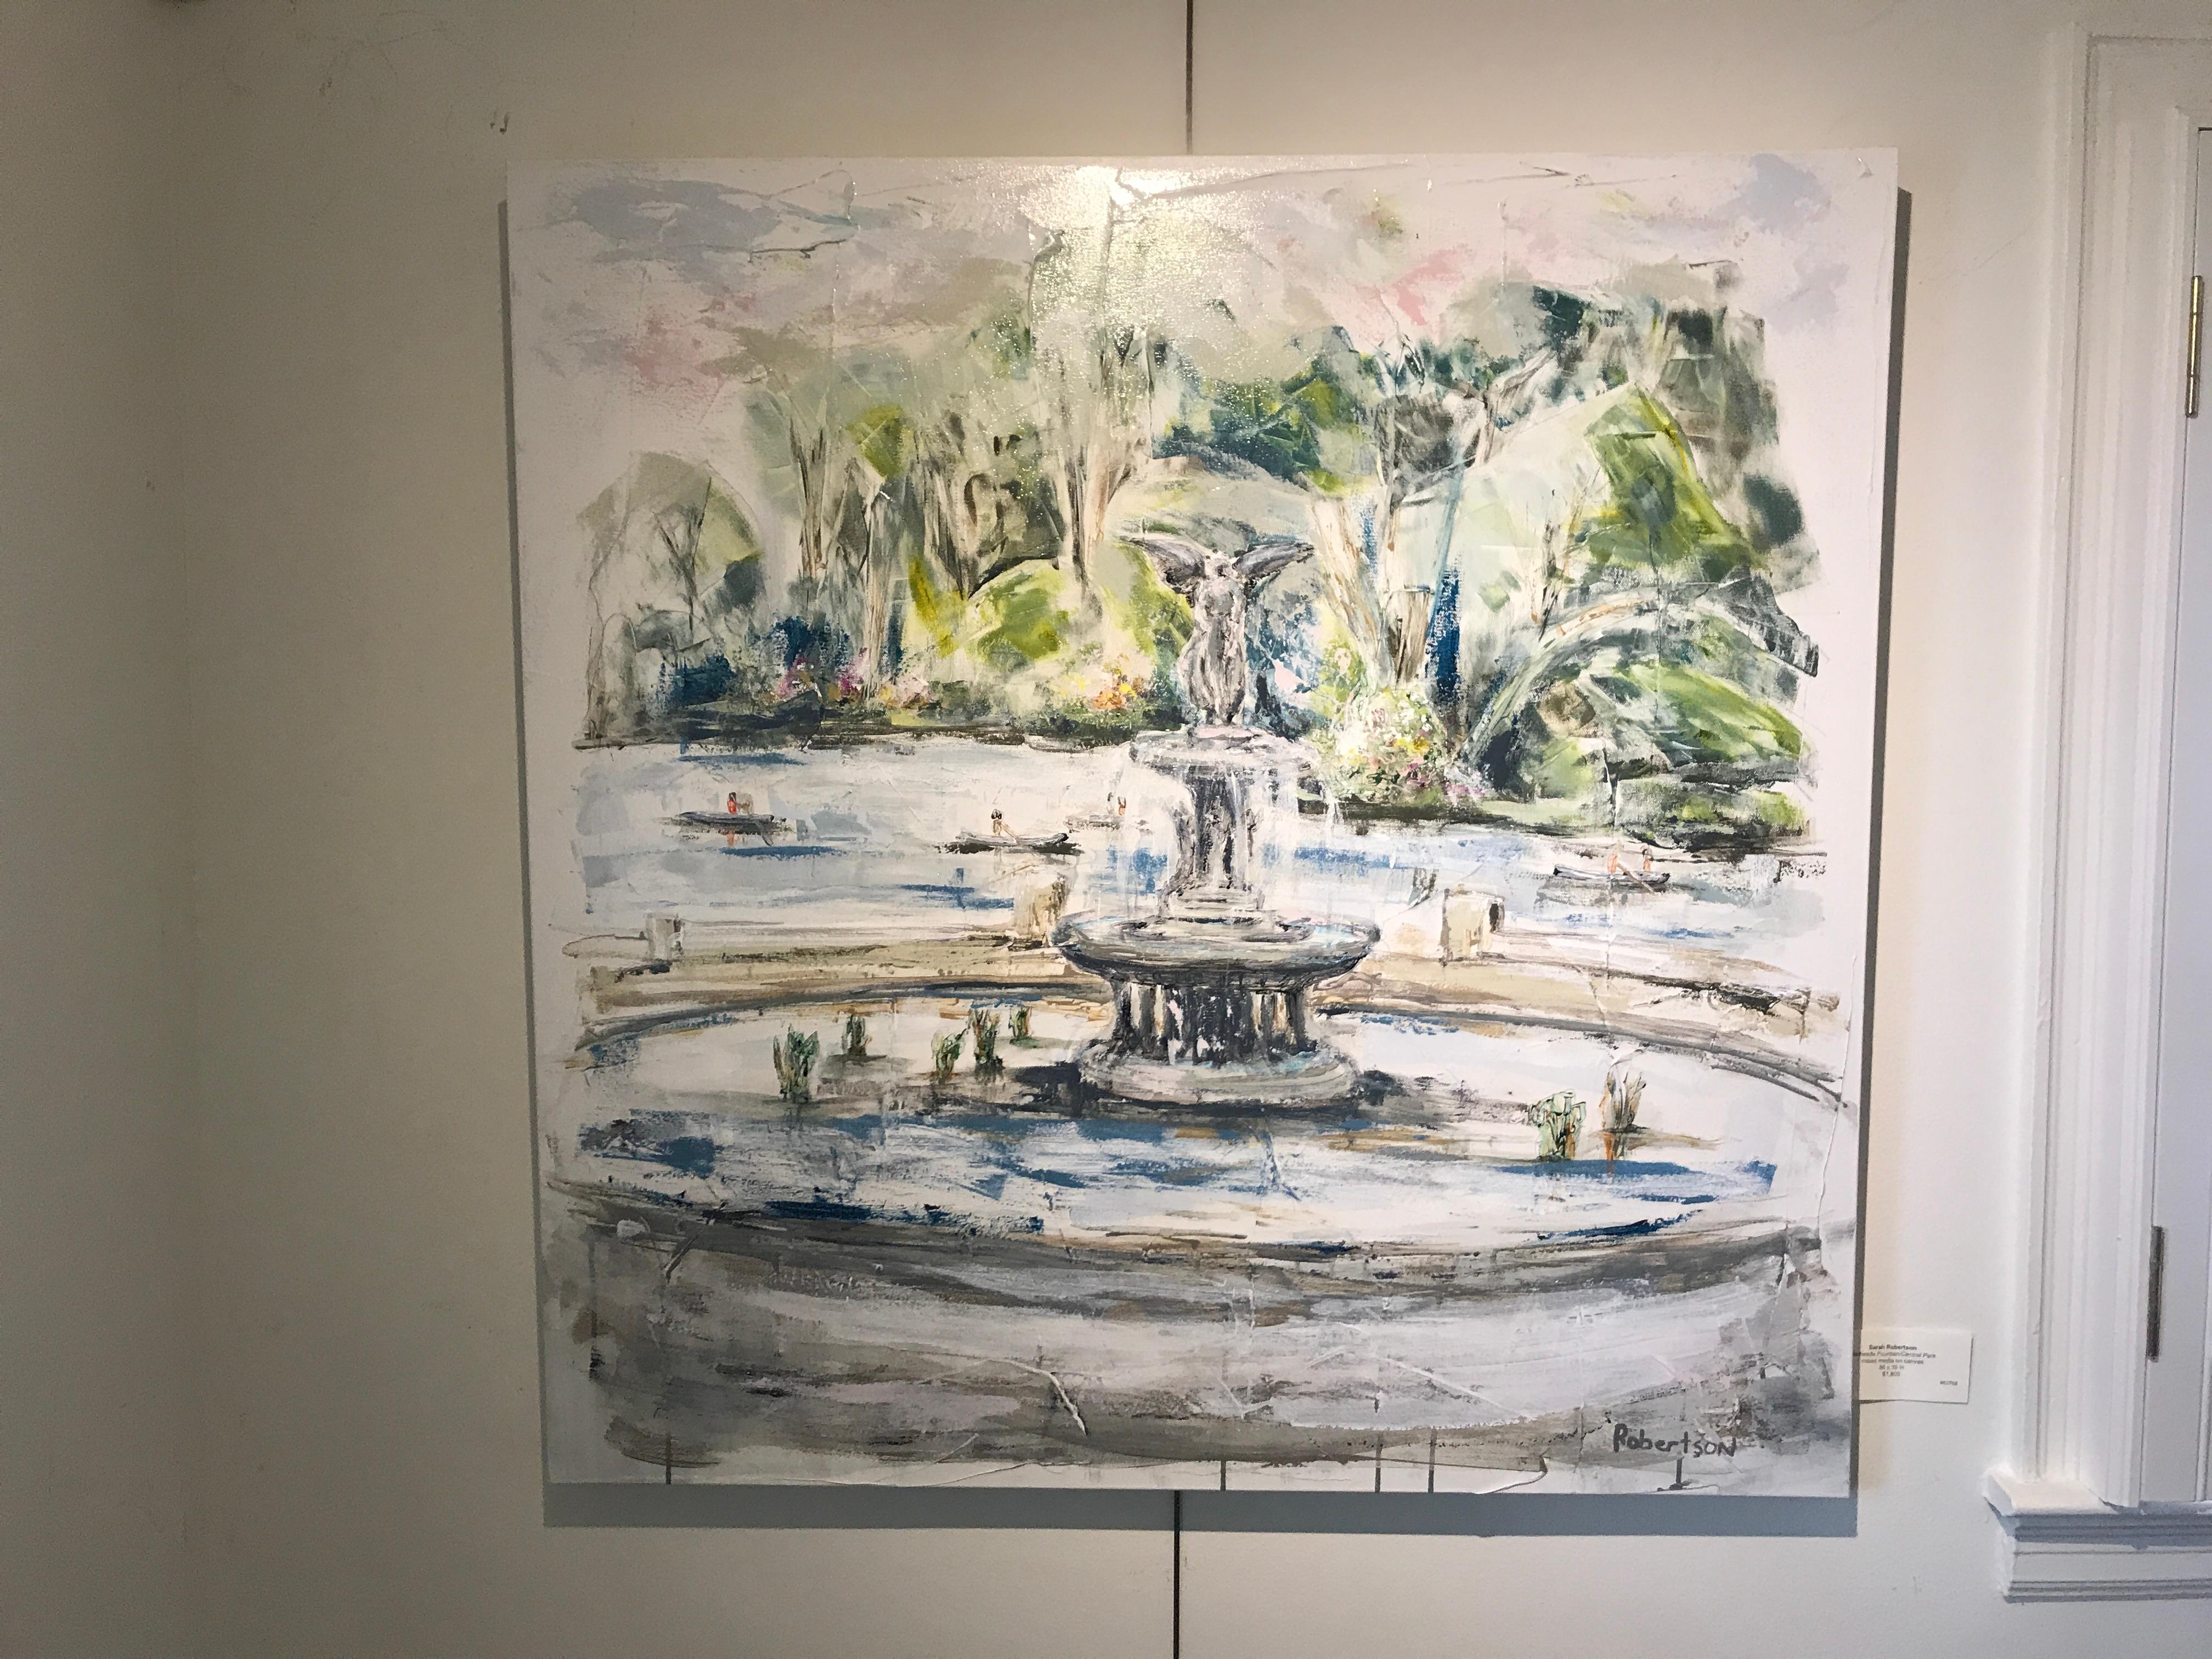 Bethesda Fountain/Central Park, Sarah Robertson Mixed Media on Canvas Painting 1